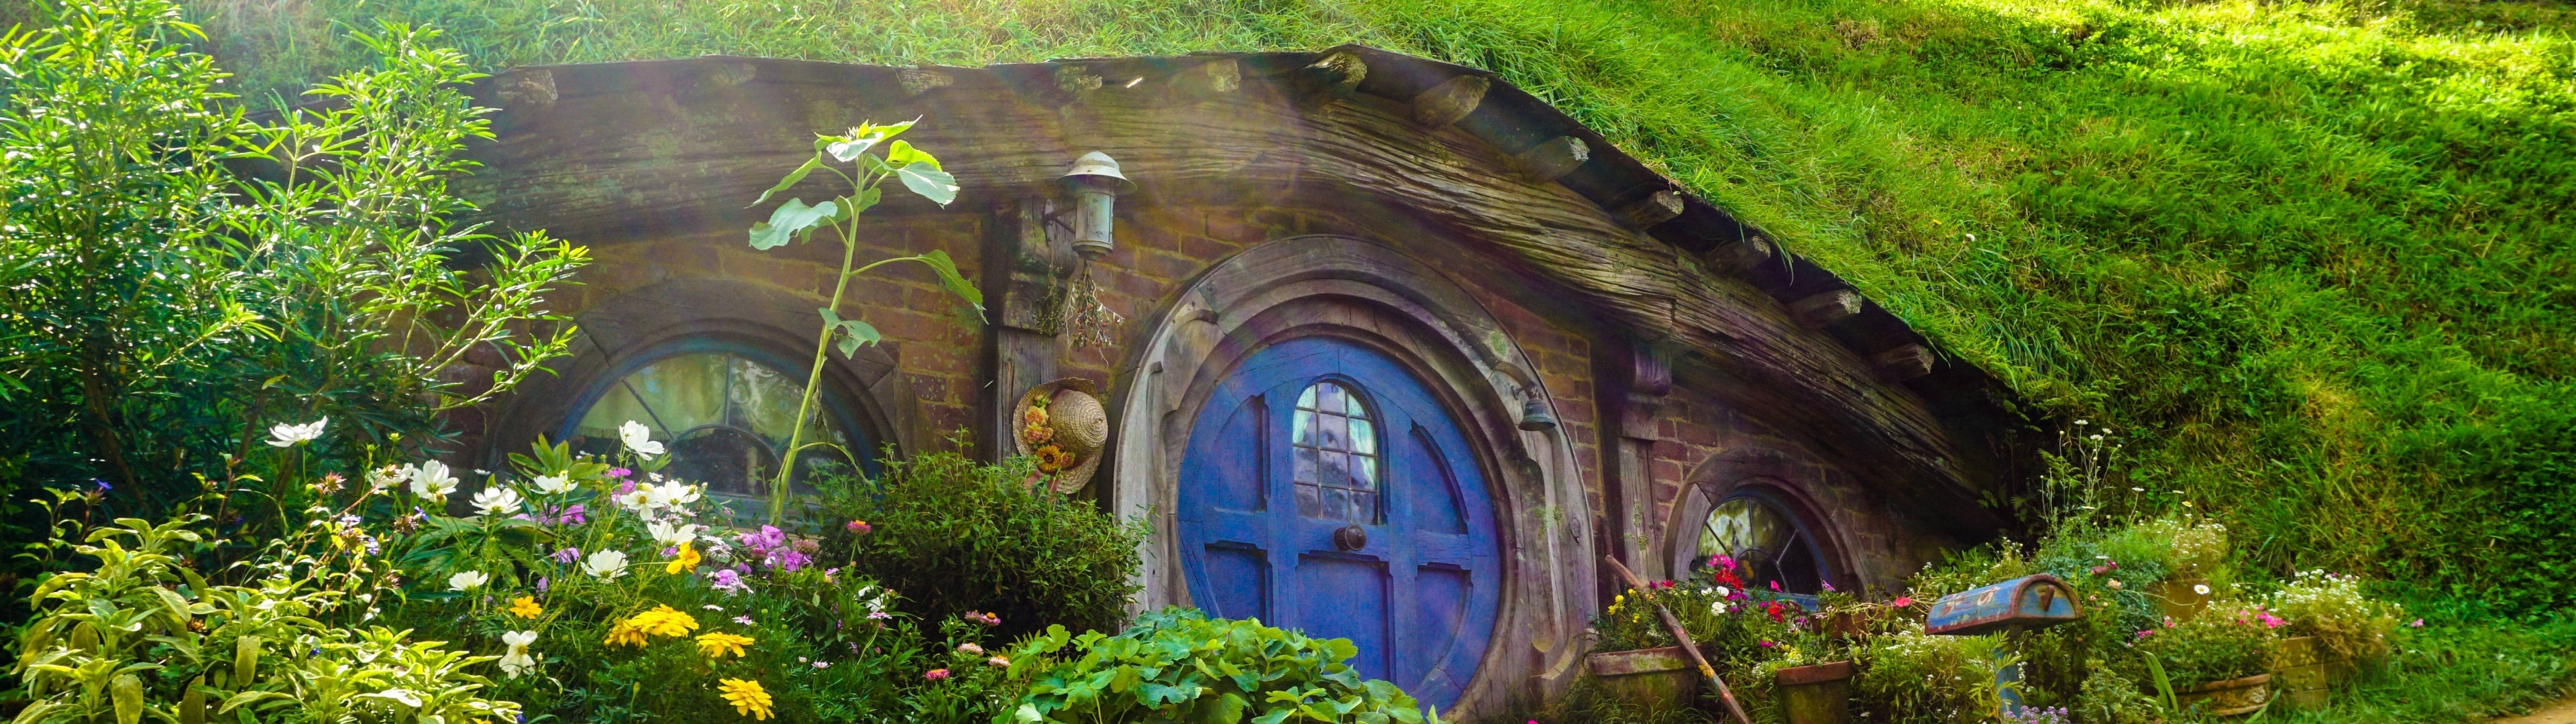 Hobbiton movie set wallpaper, The Lord of the Rings, Hobbit film, Epic world, 3840x1080 Dual Screen Desktop